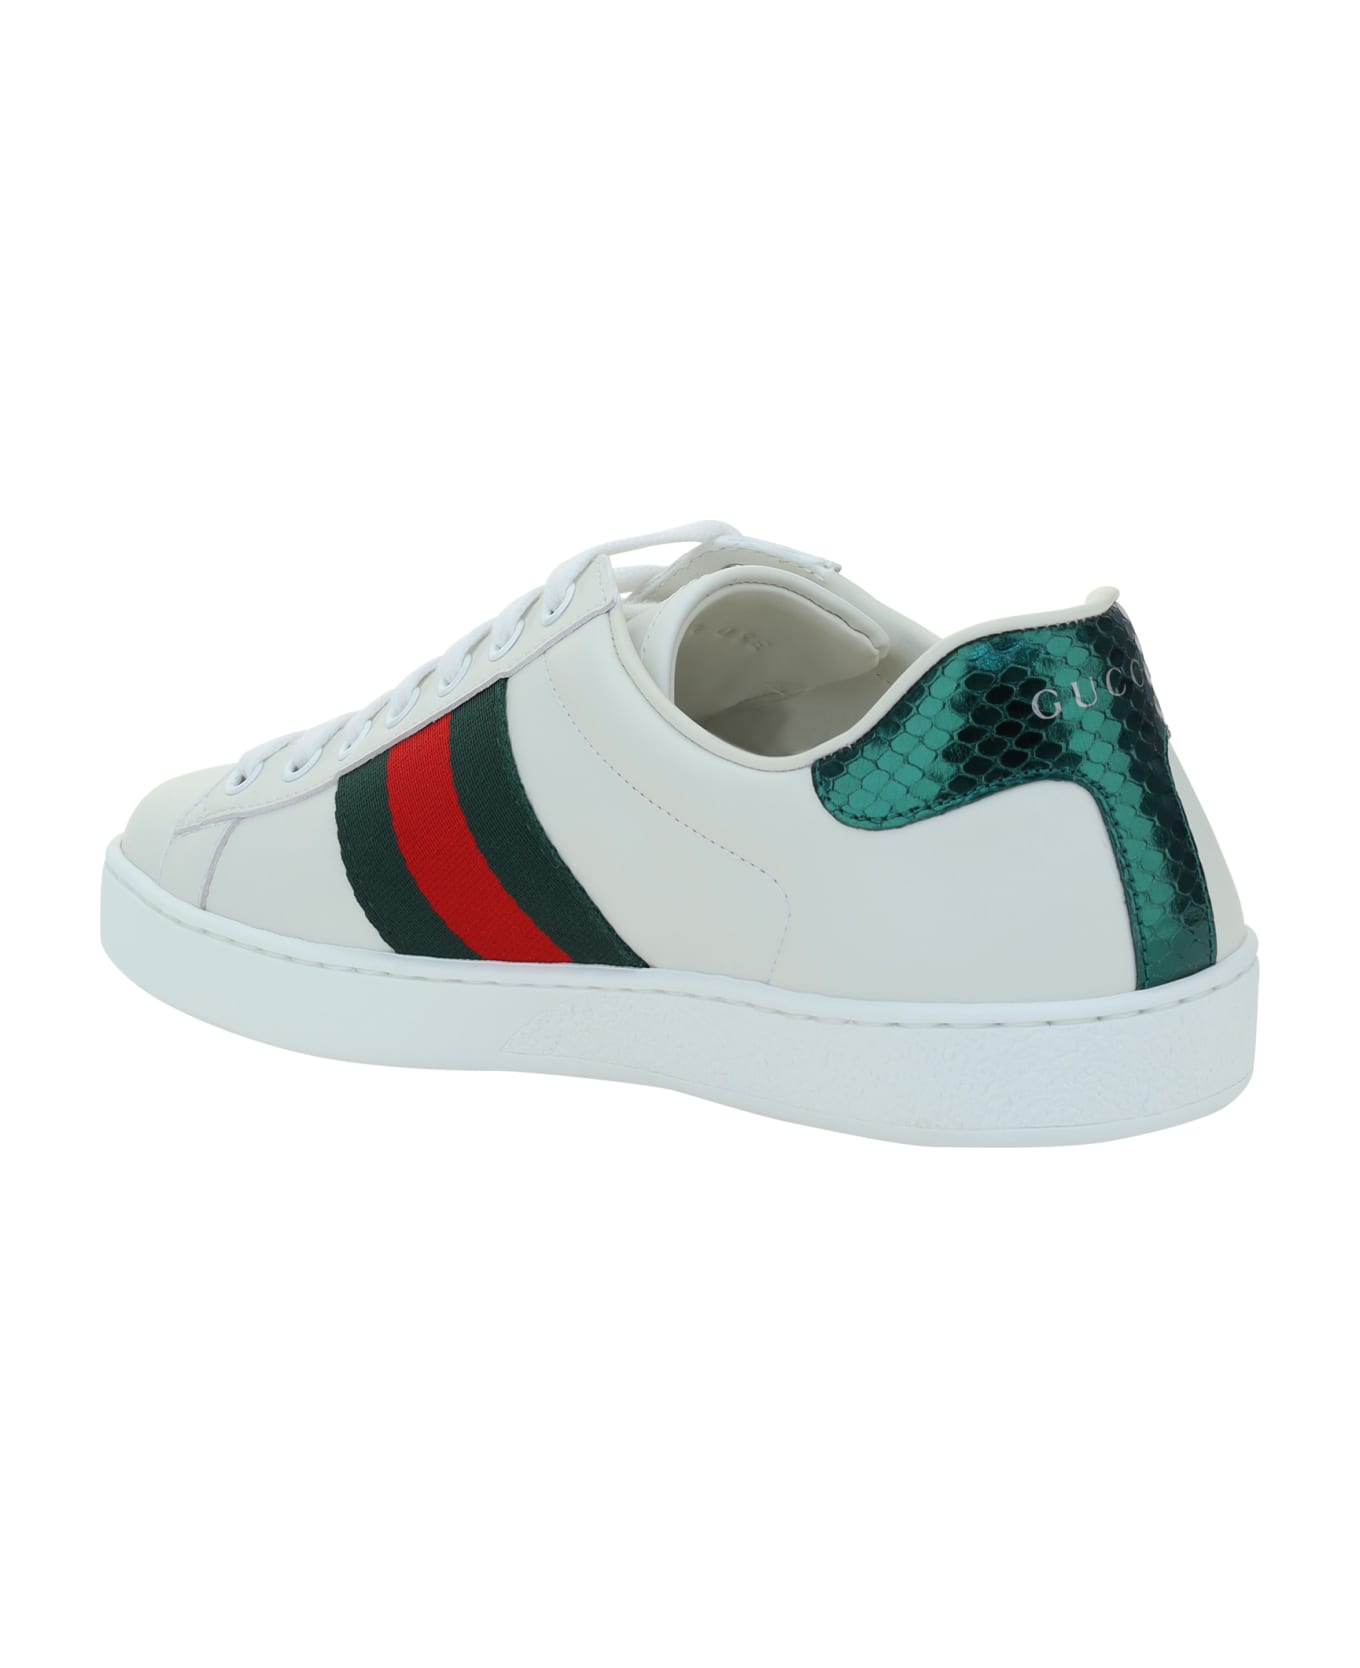 Gucci Sneakers - Bia/vrv/r.flame/verd